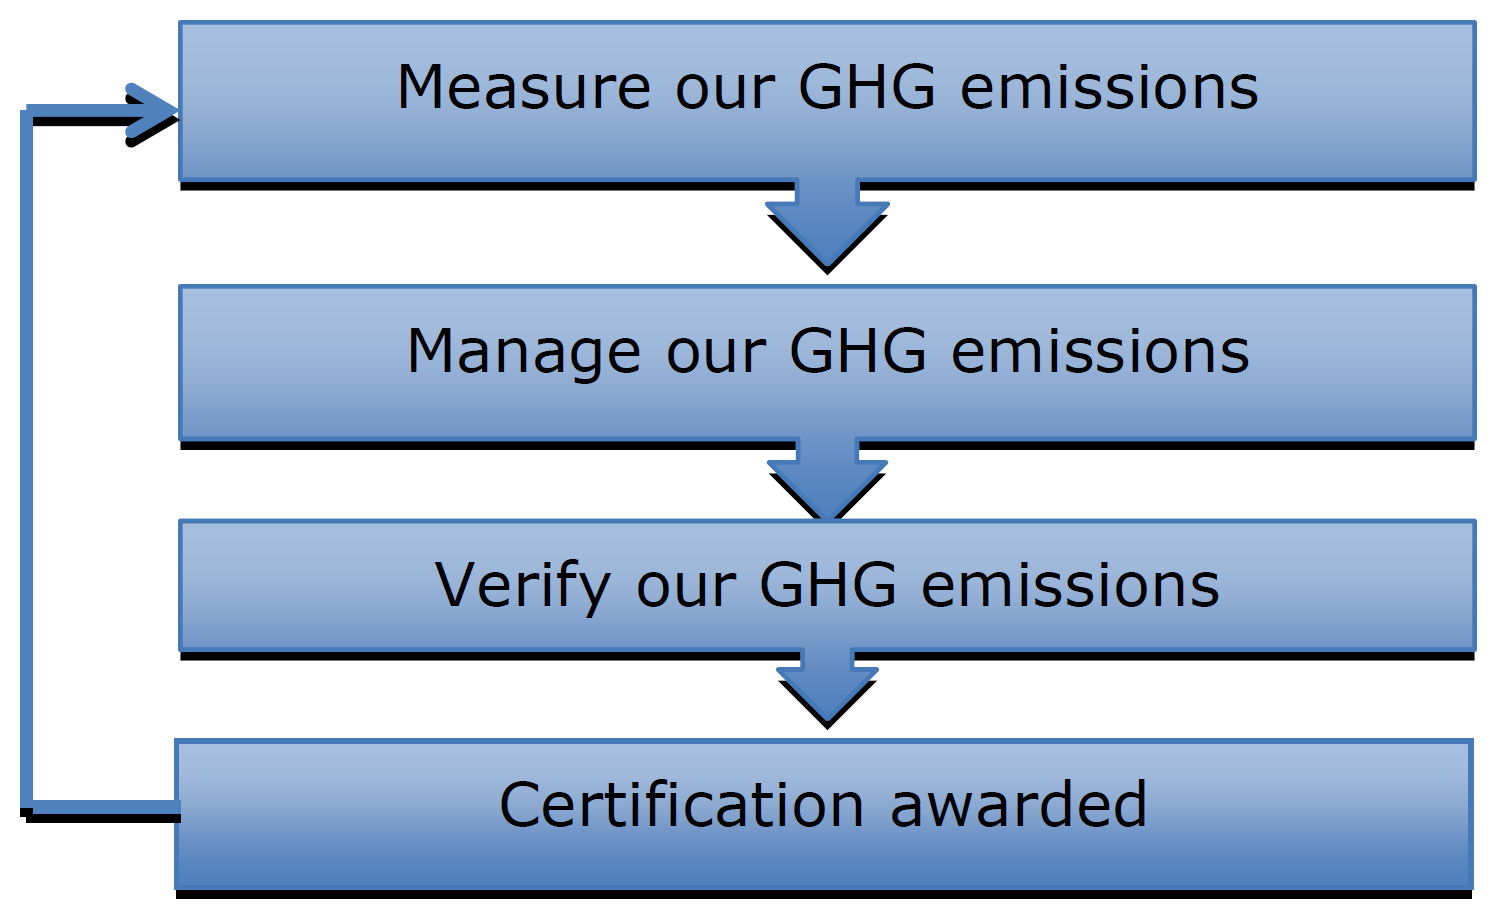 Process flow of steps taken to gain CarbonReduce certification